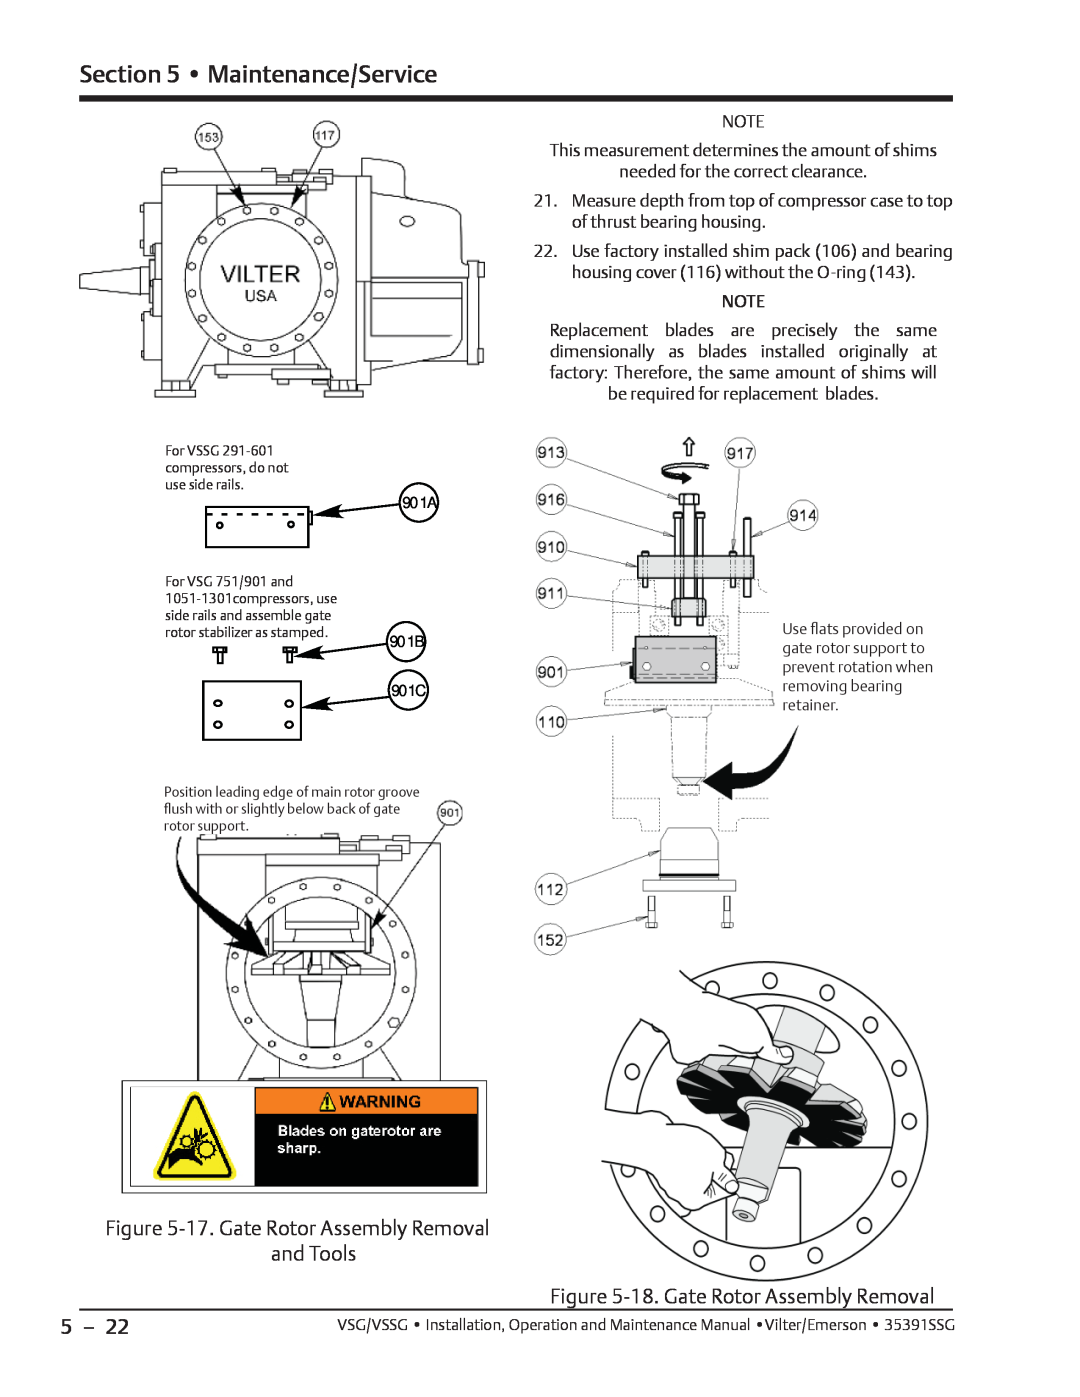 Emerson VSSG, VSG manual 17. Gate Rotor Assembly Removal and Tools, 18. Gate Rotor Assembly Removal, Maintenance/Service 